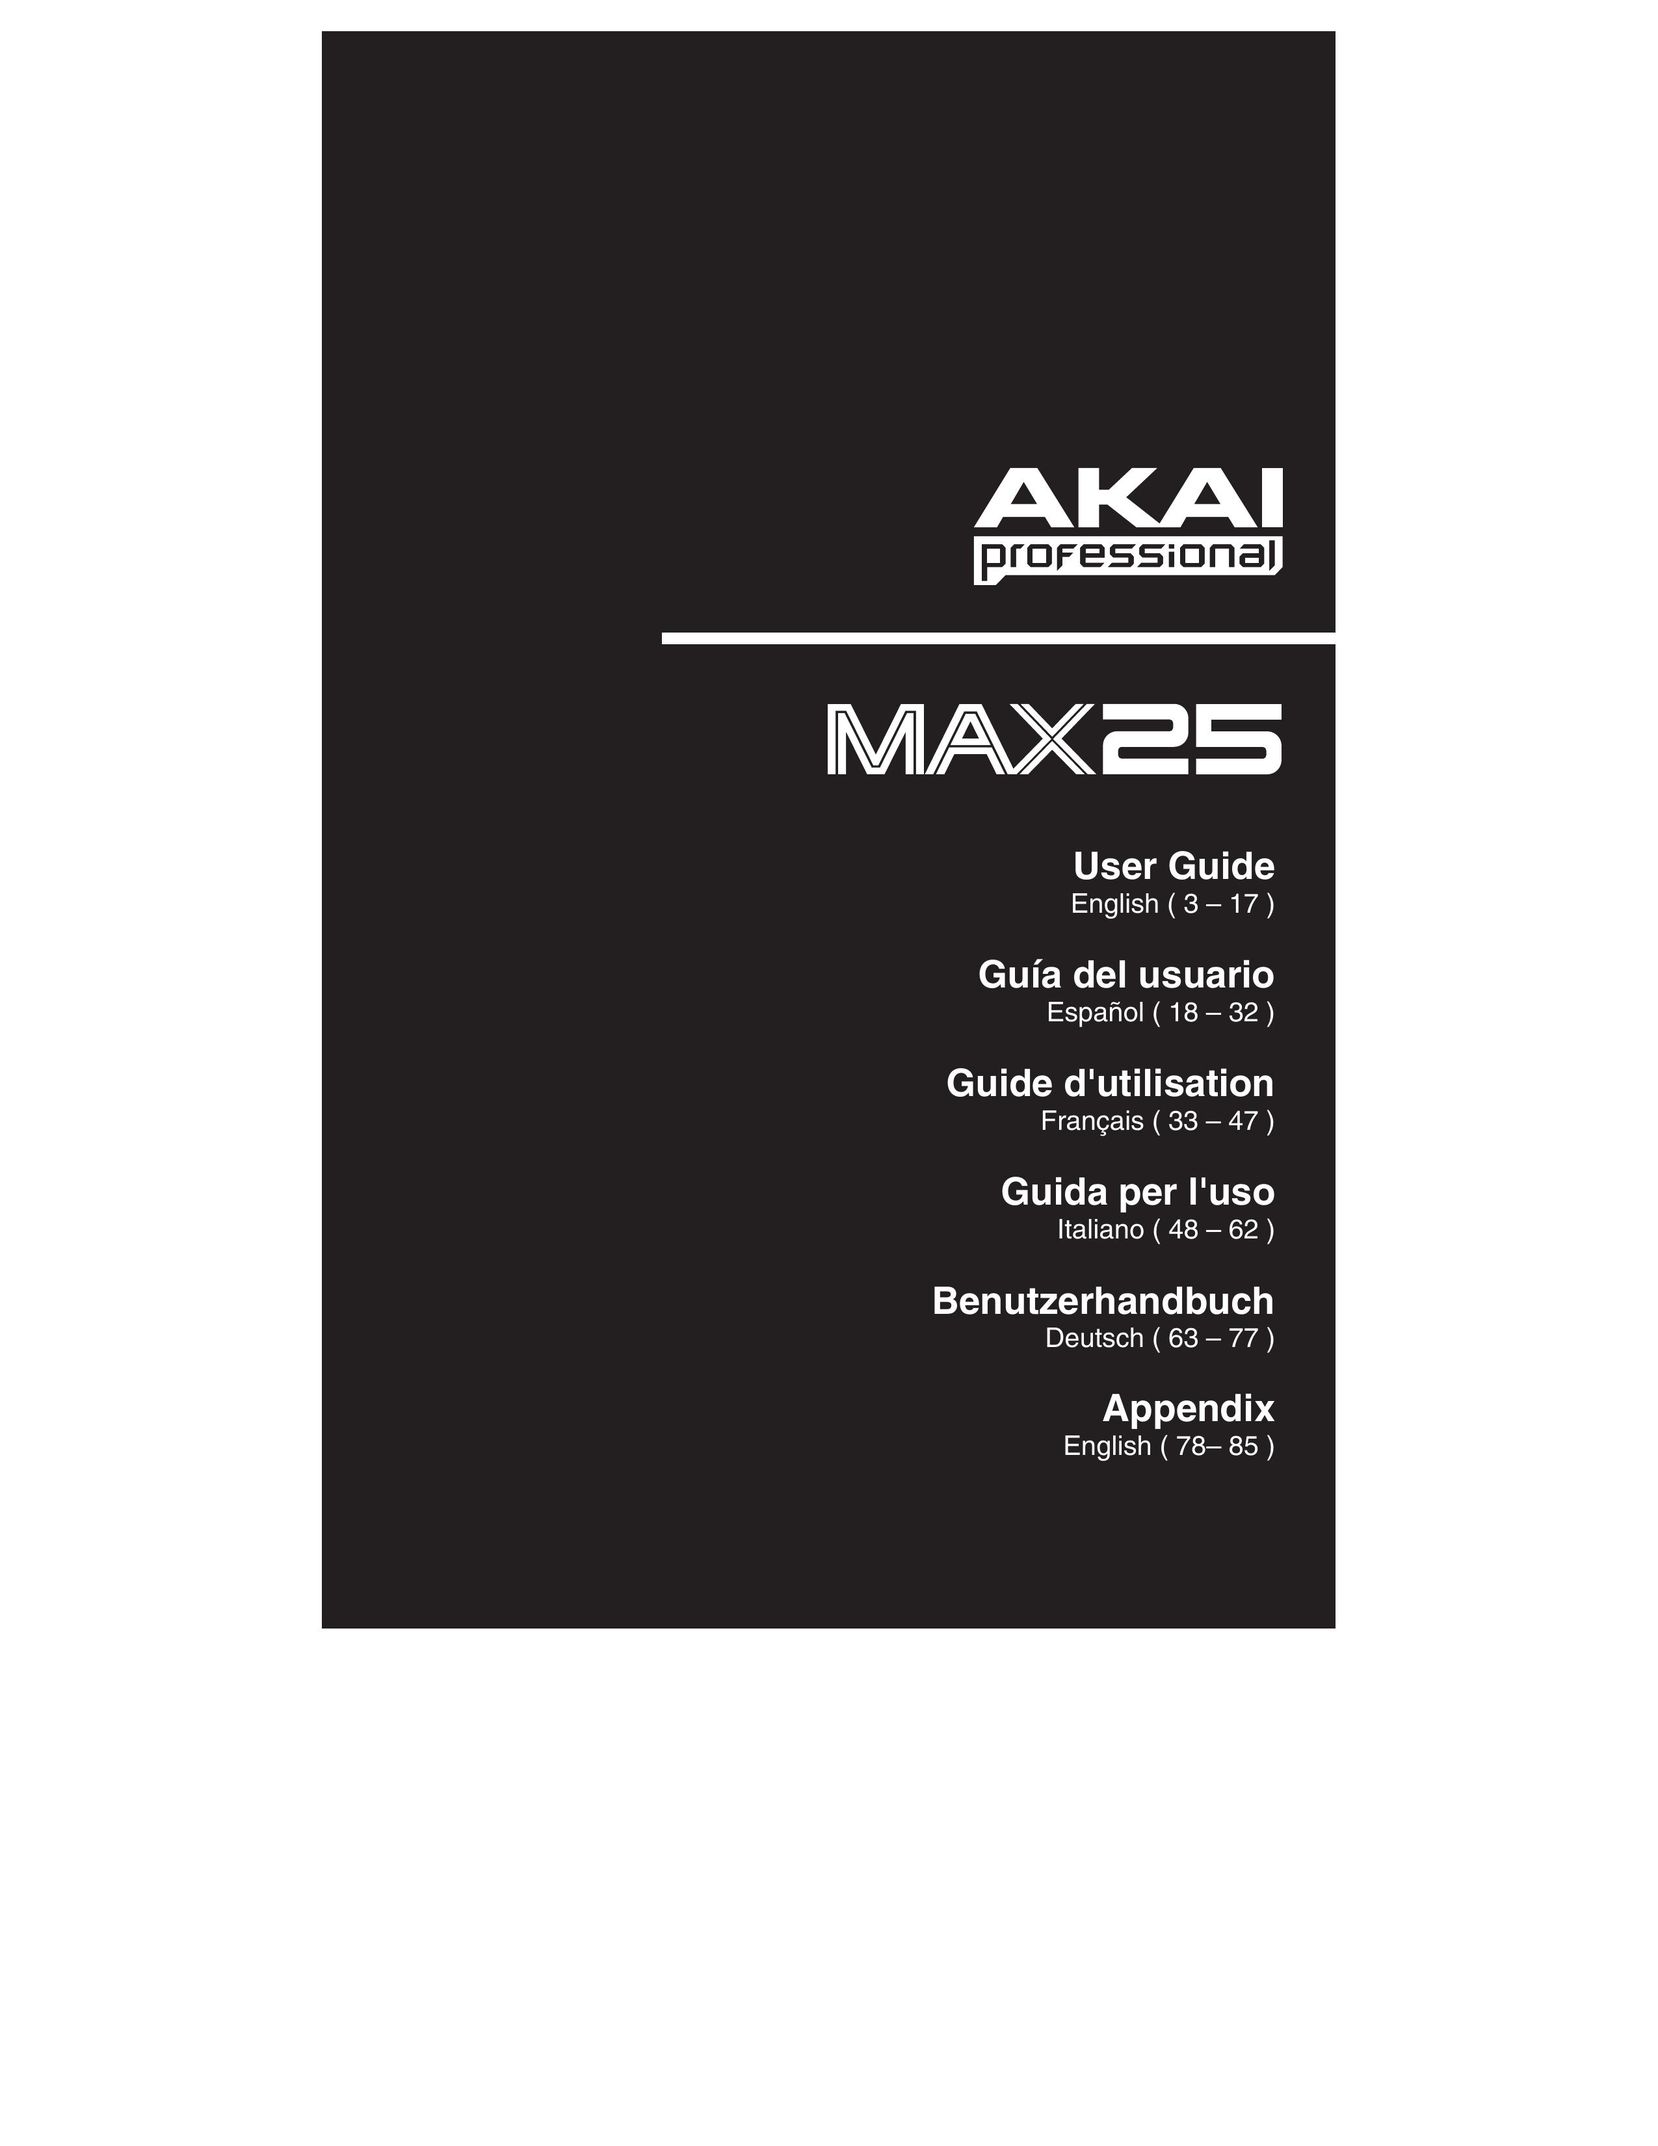 Akai MAX25 Video Game Keyboard User Manual (Page 1)